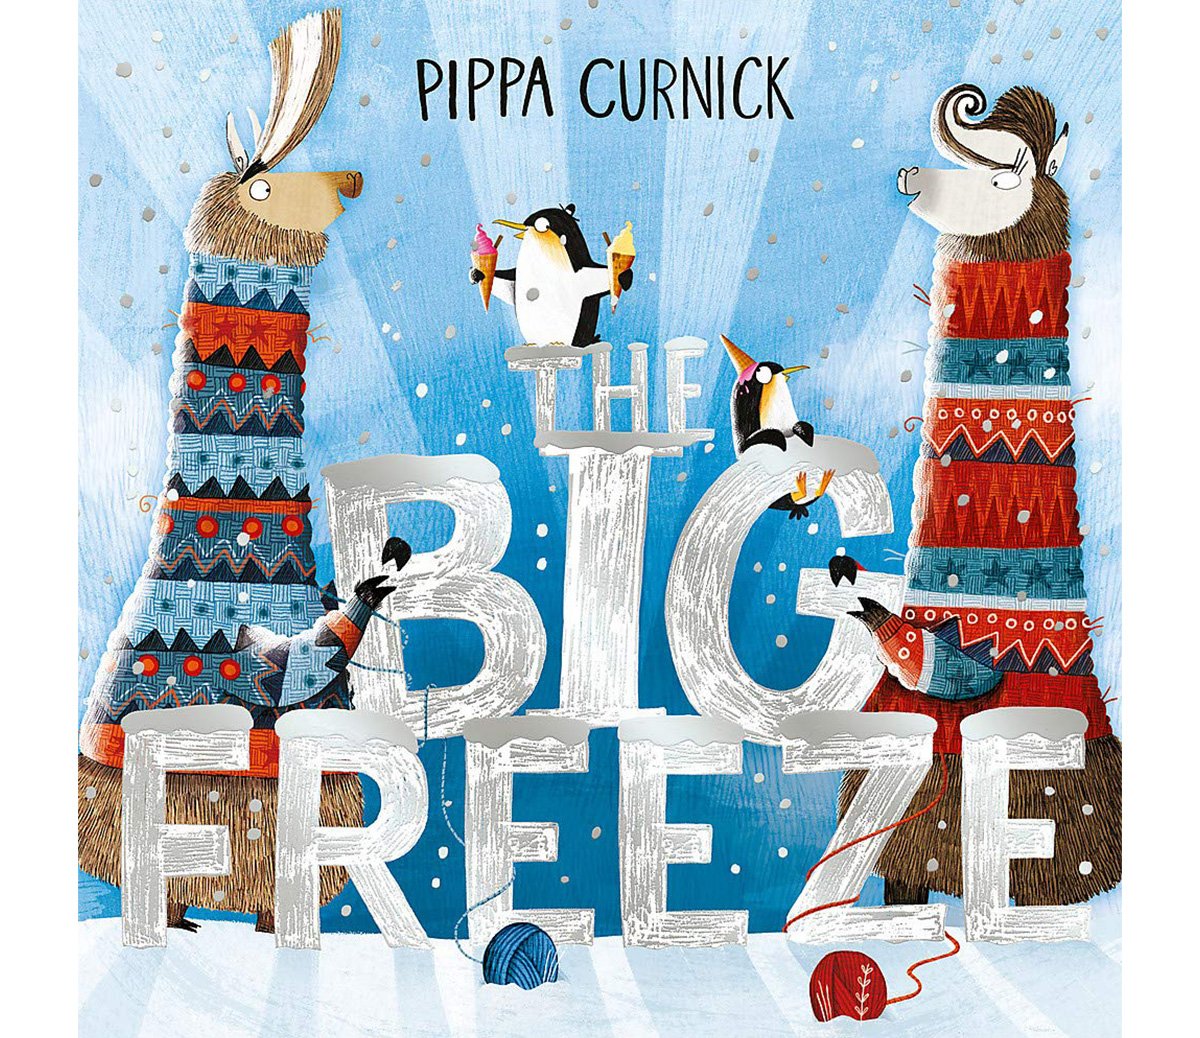 pippa-curnick-big-freeze-cover-illustration.jpg